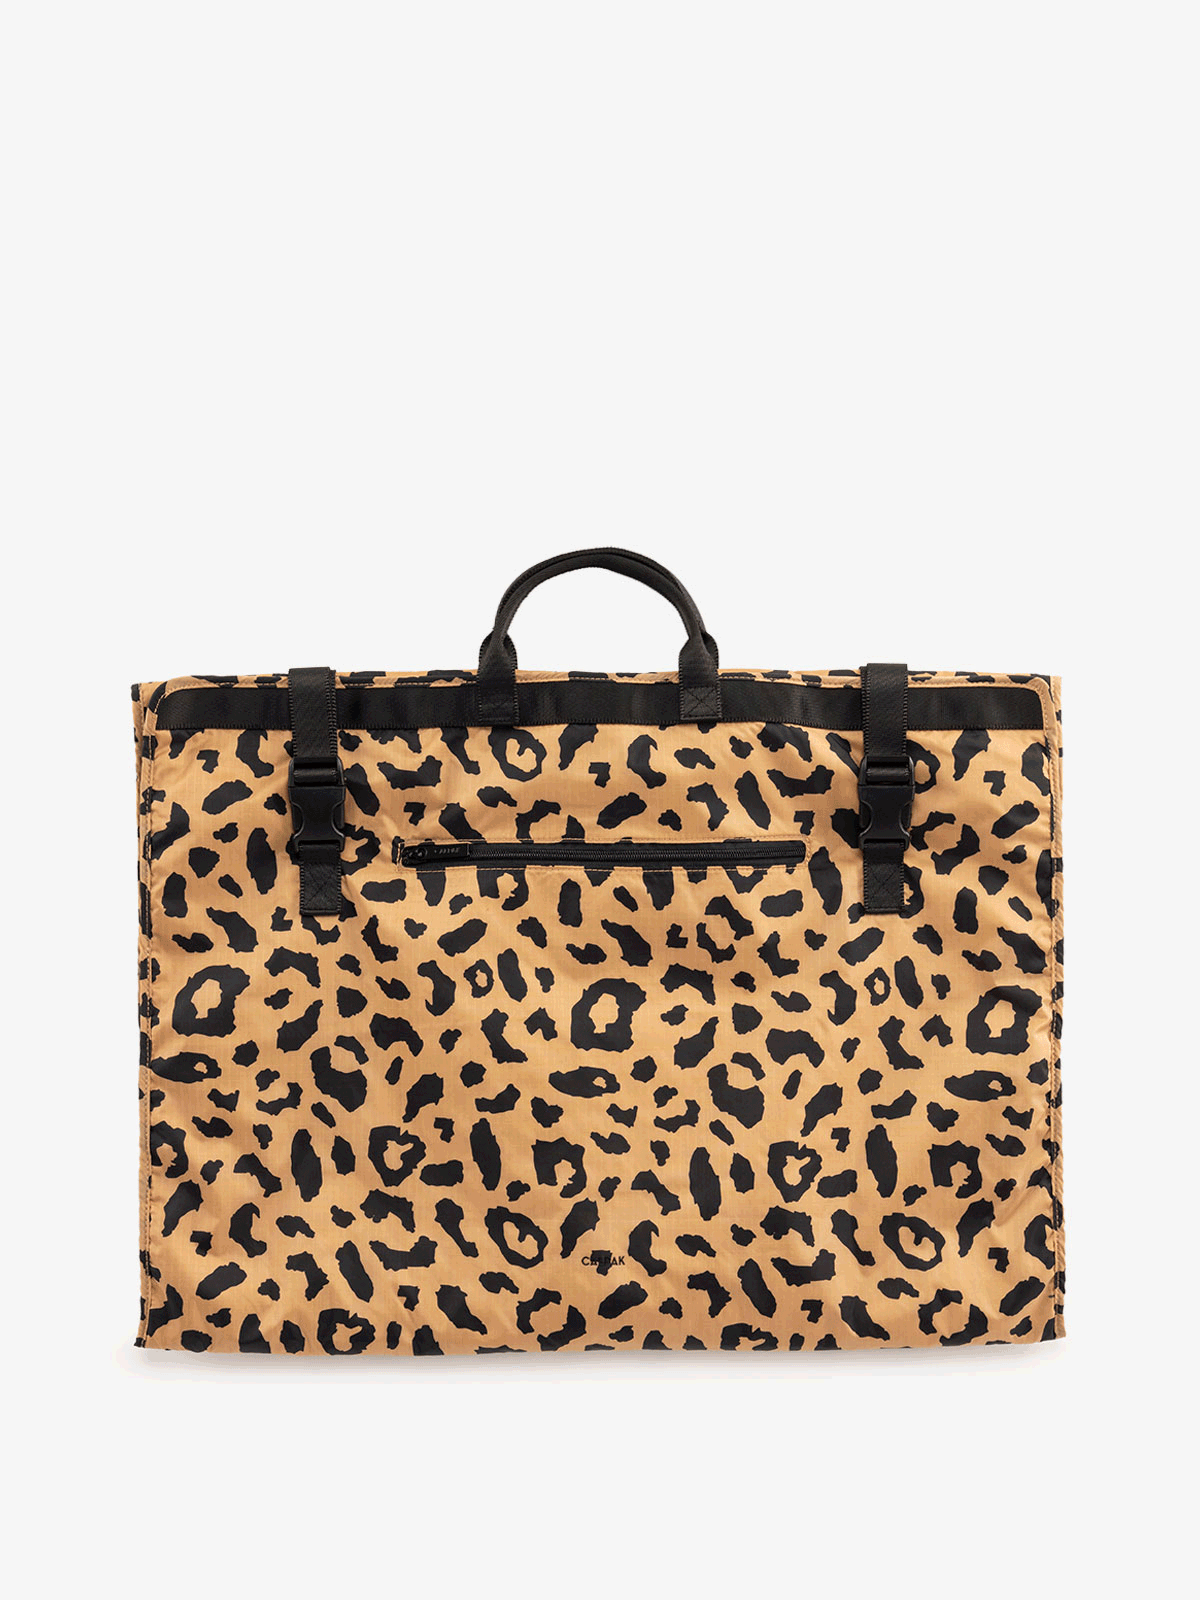 CALPAK foldable garment bag with storage in cheetah